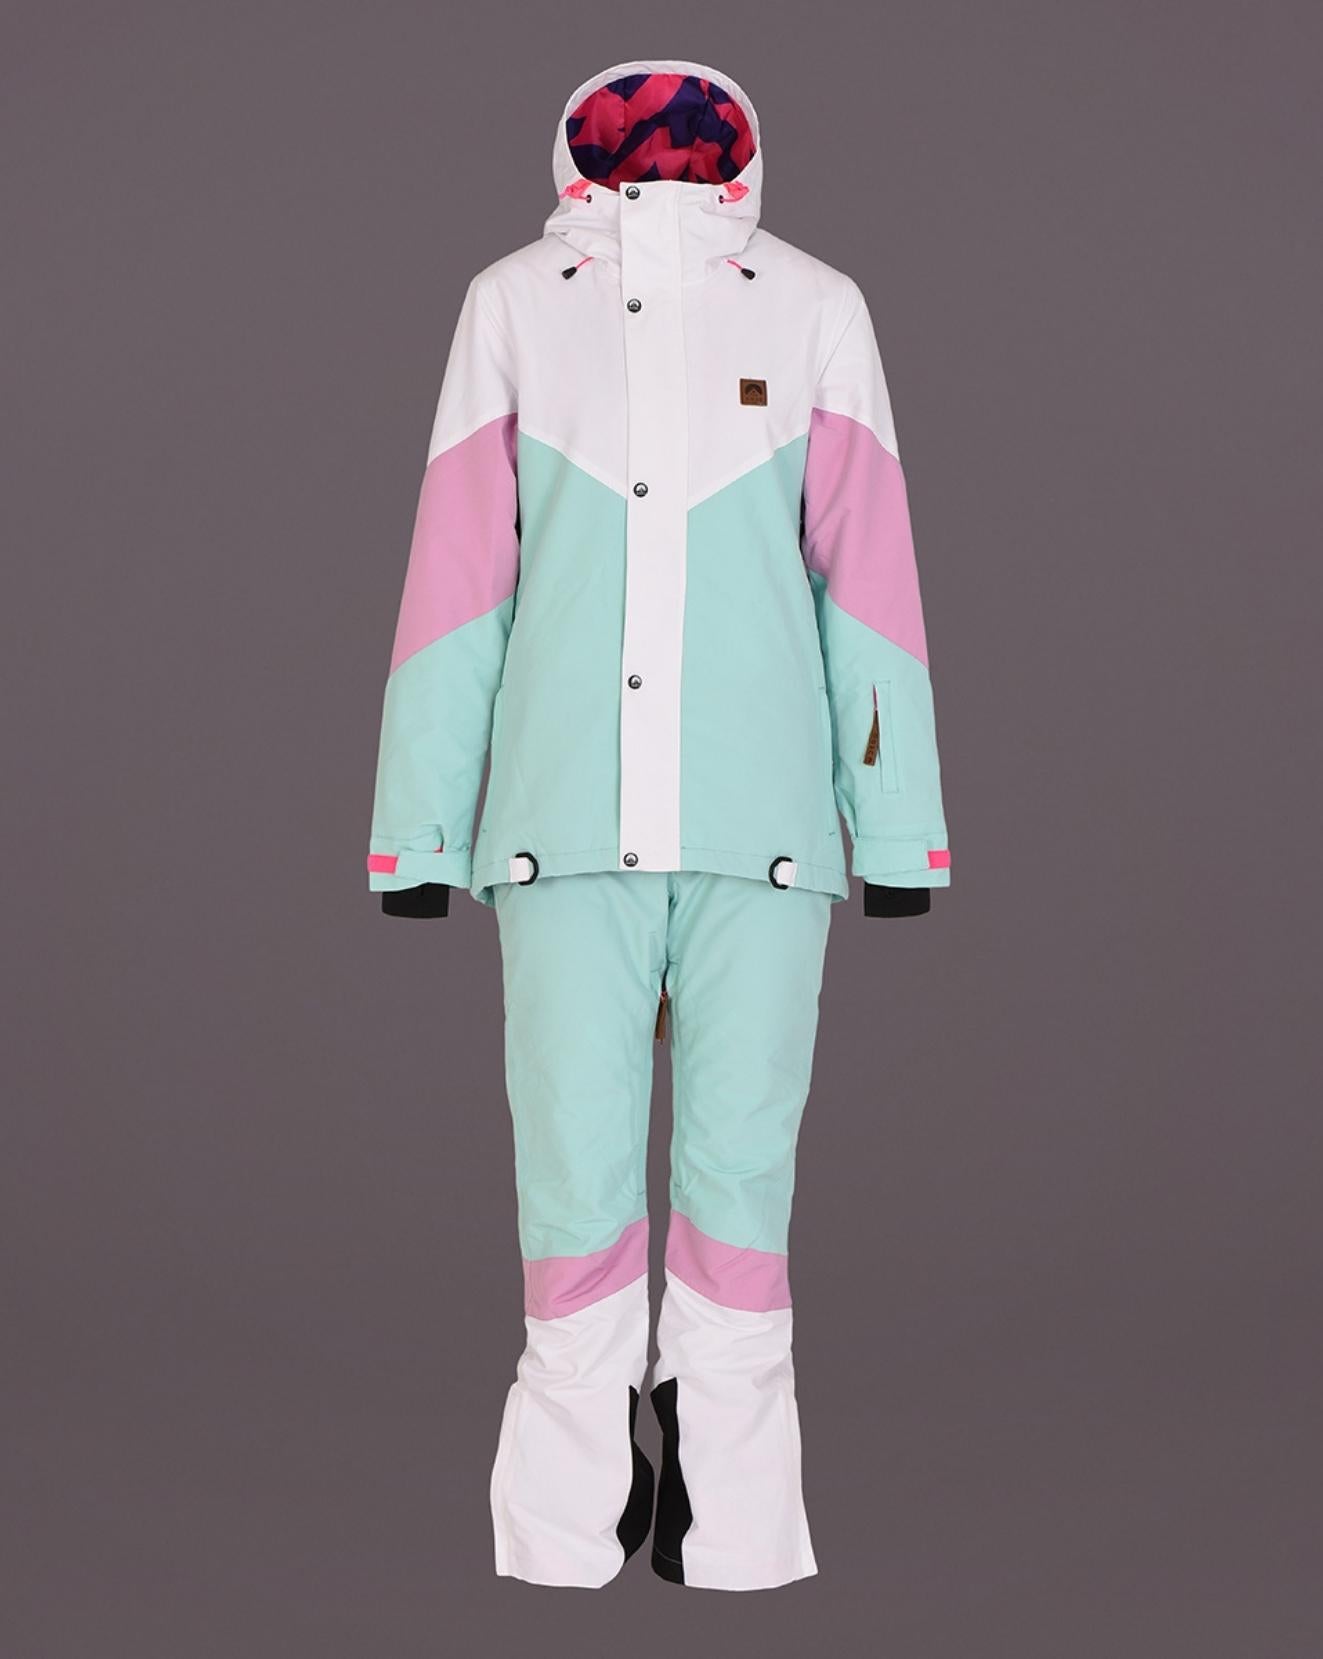 1080 Women's Ski & Snowboard Pant - Pastel Pink, White & Pastel Mint